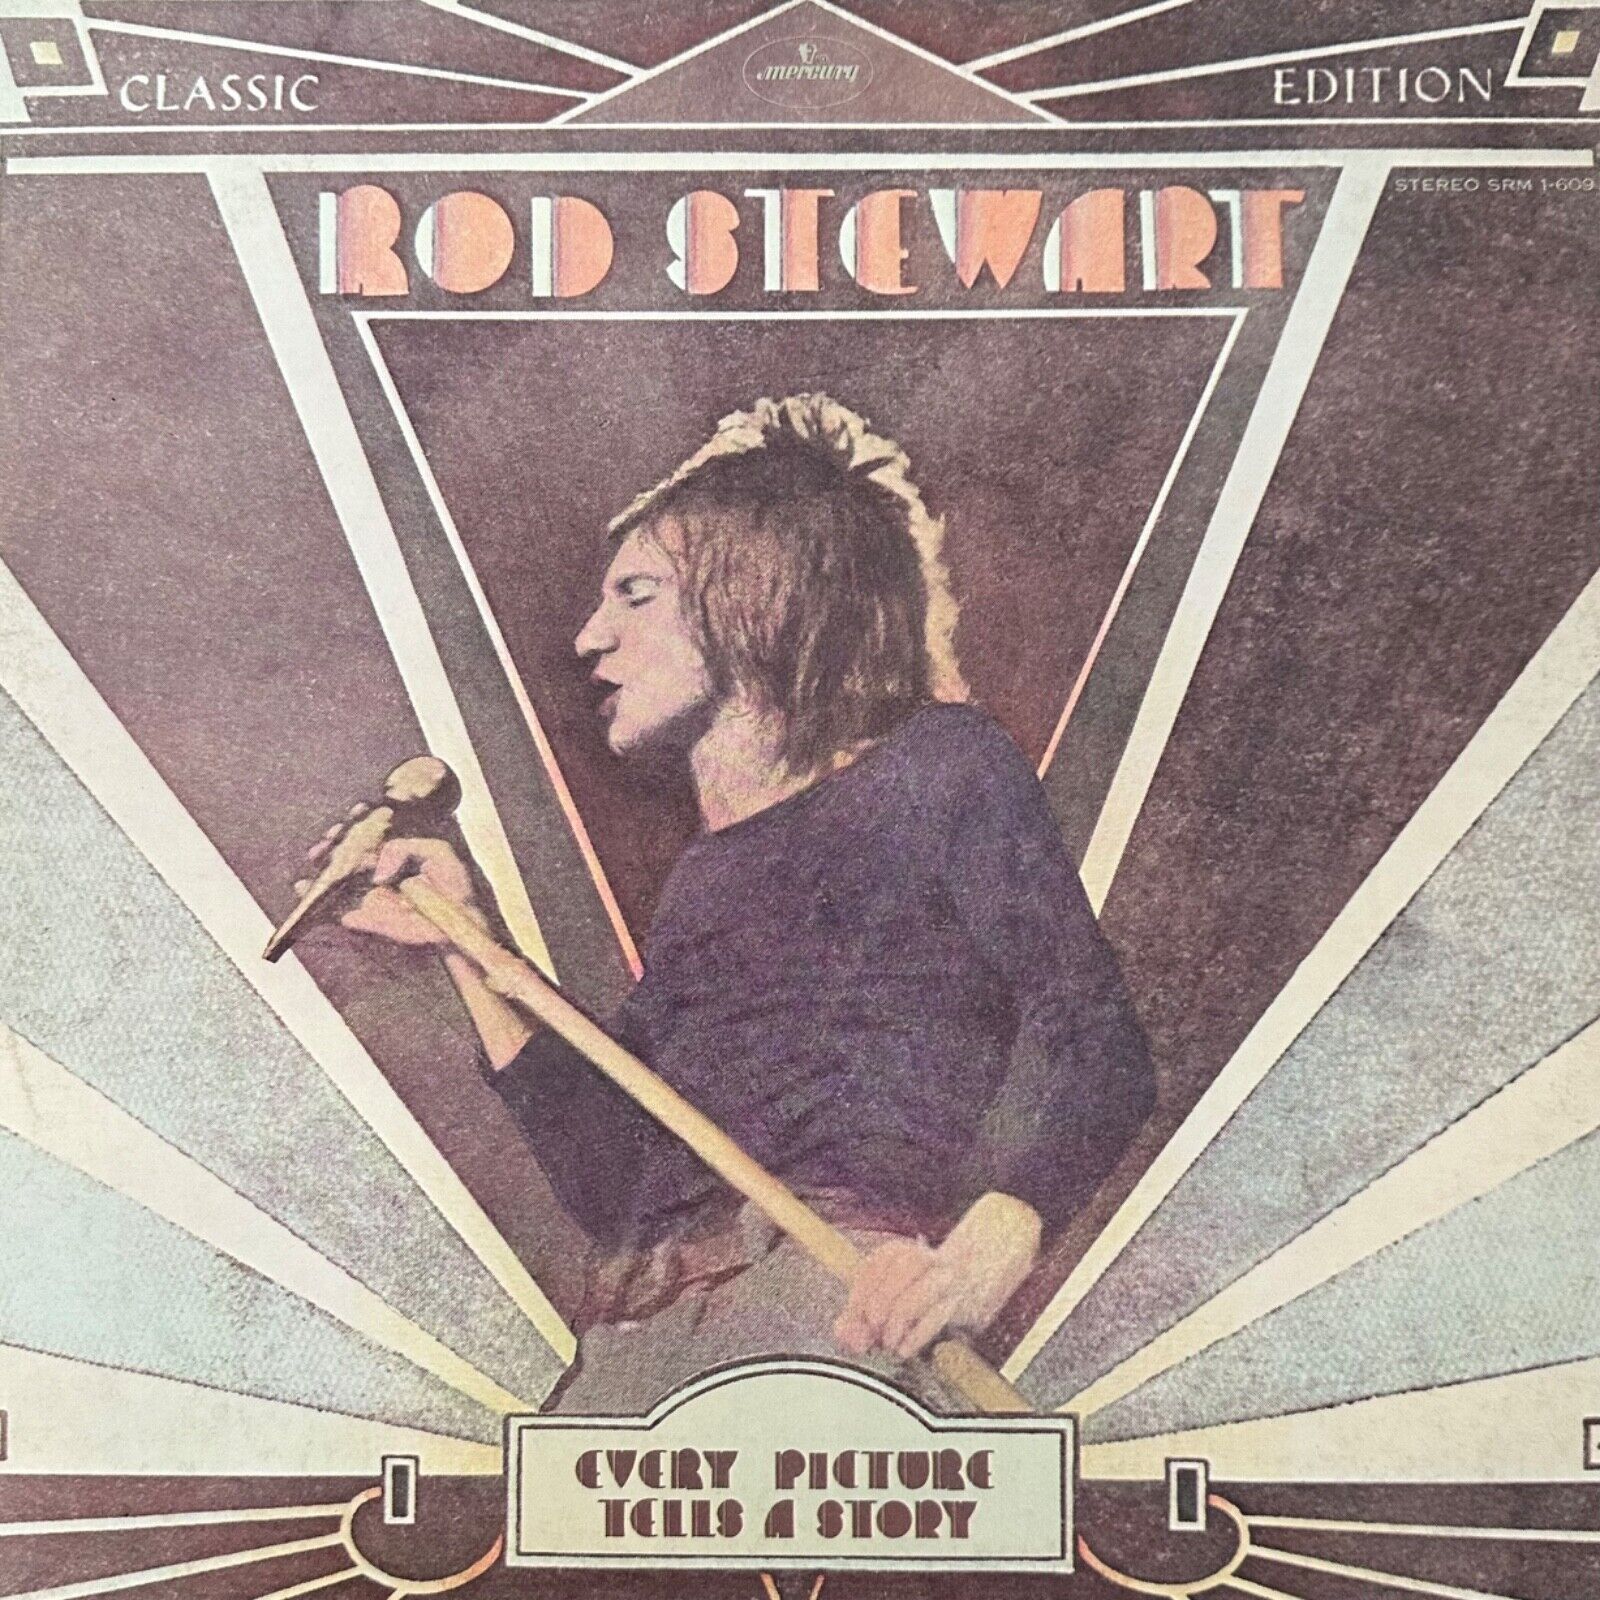 Rod Stewart Every Picture Tells A Story Vinyl LP 1971 Mercury SRM-1609 Original